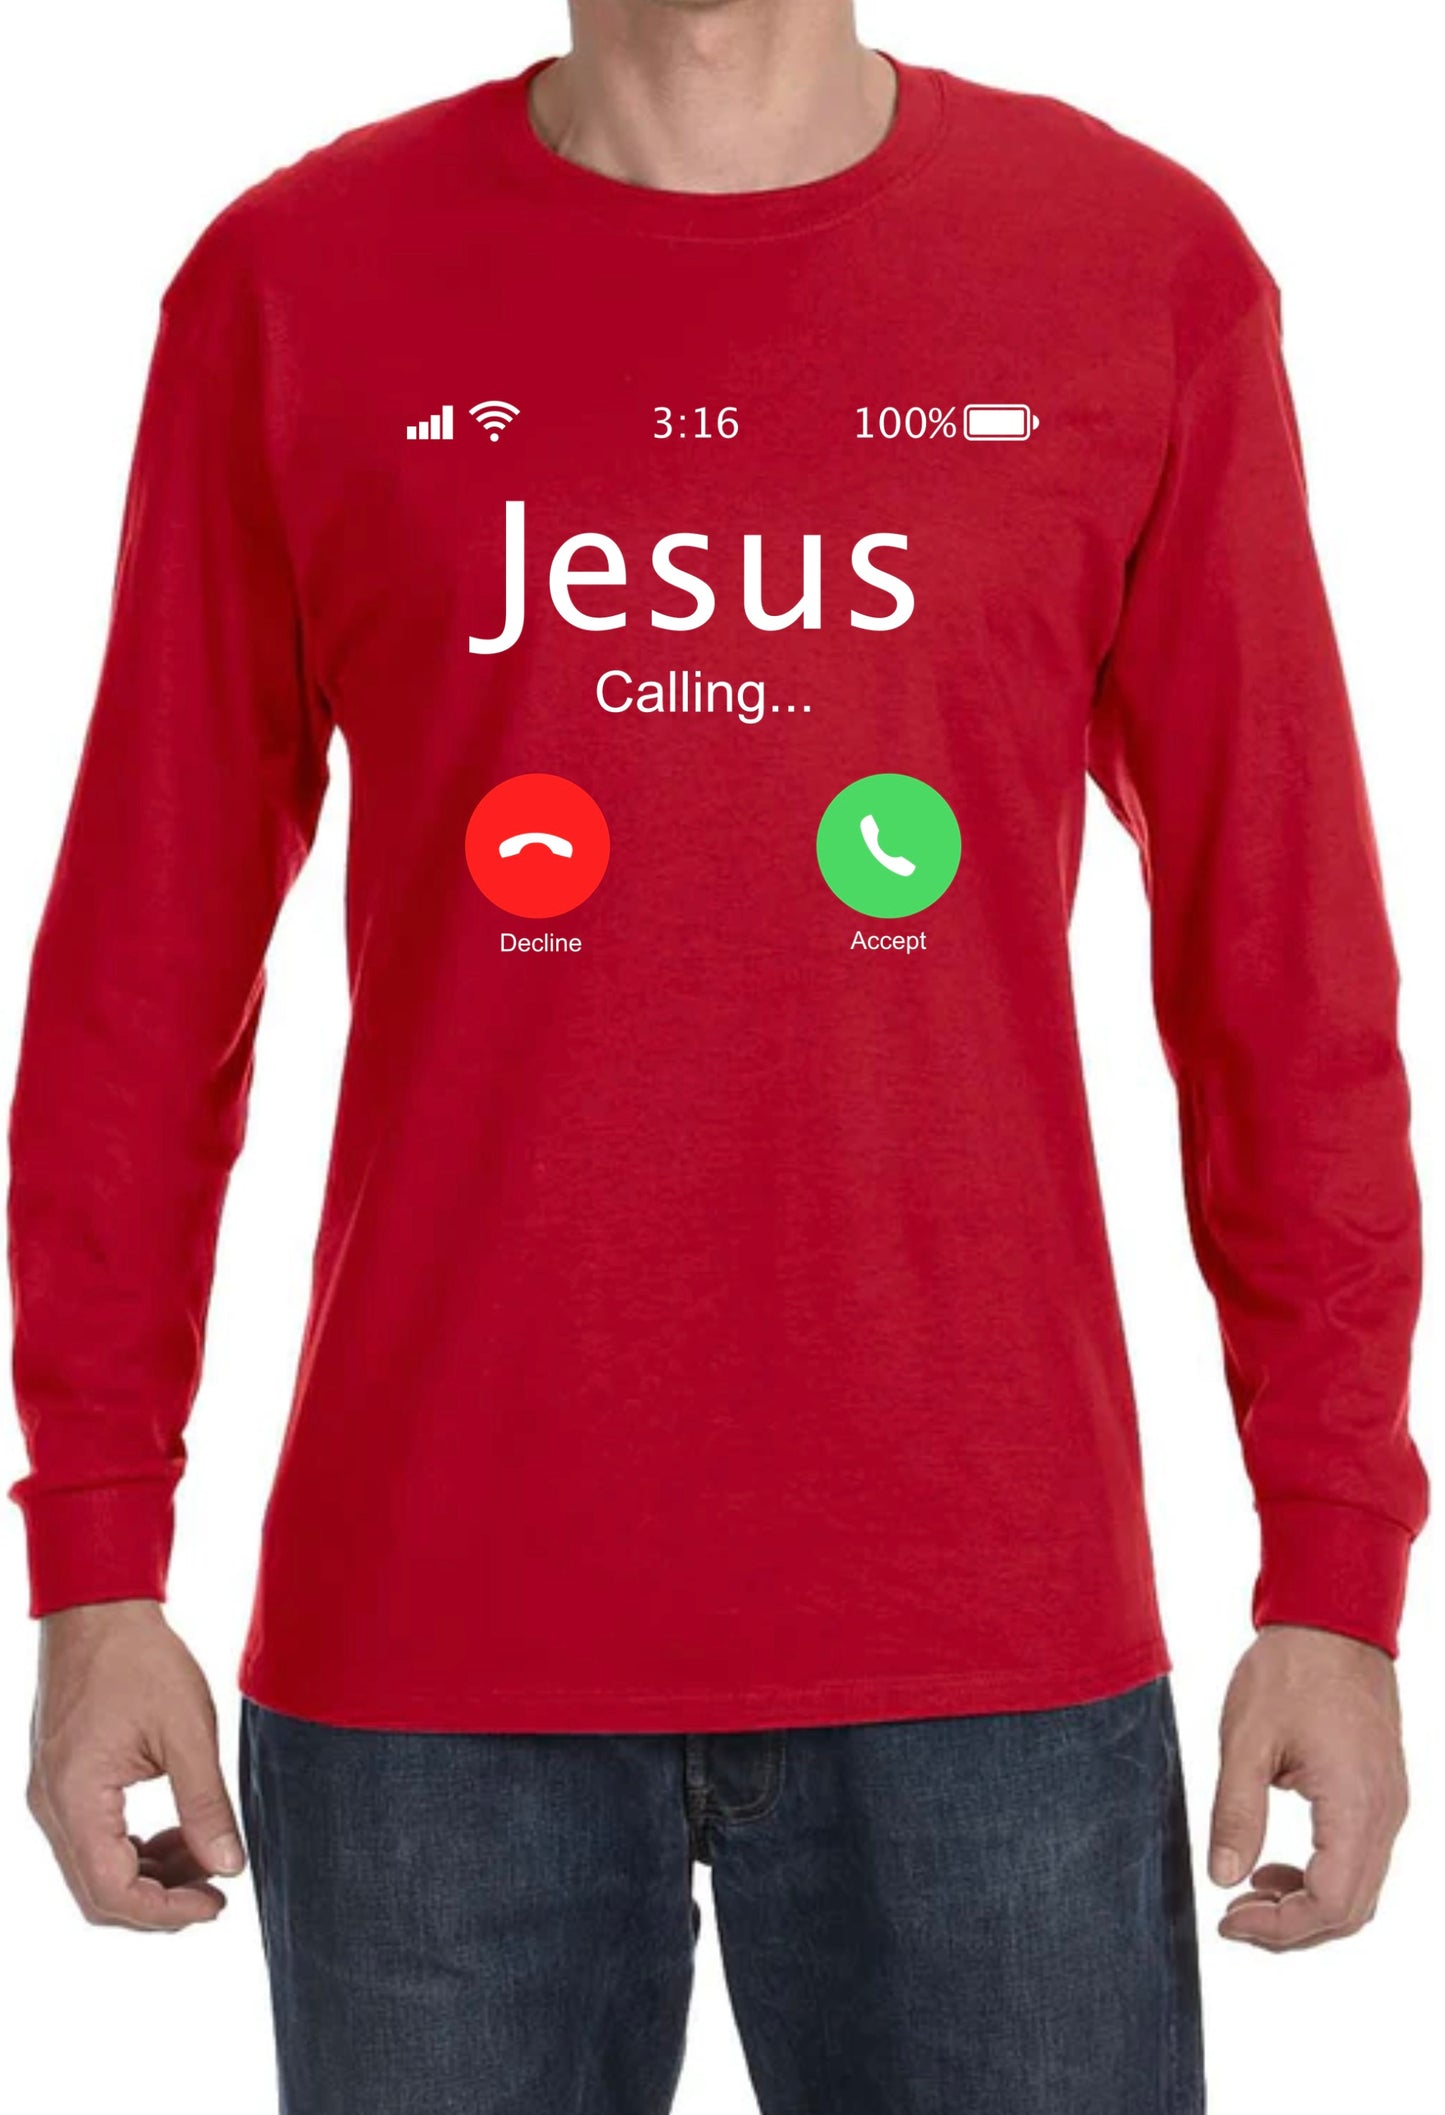 Jesus is Calling Shirt